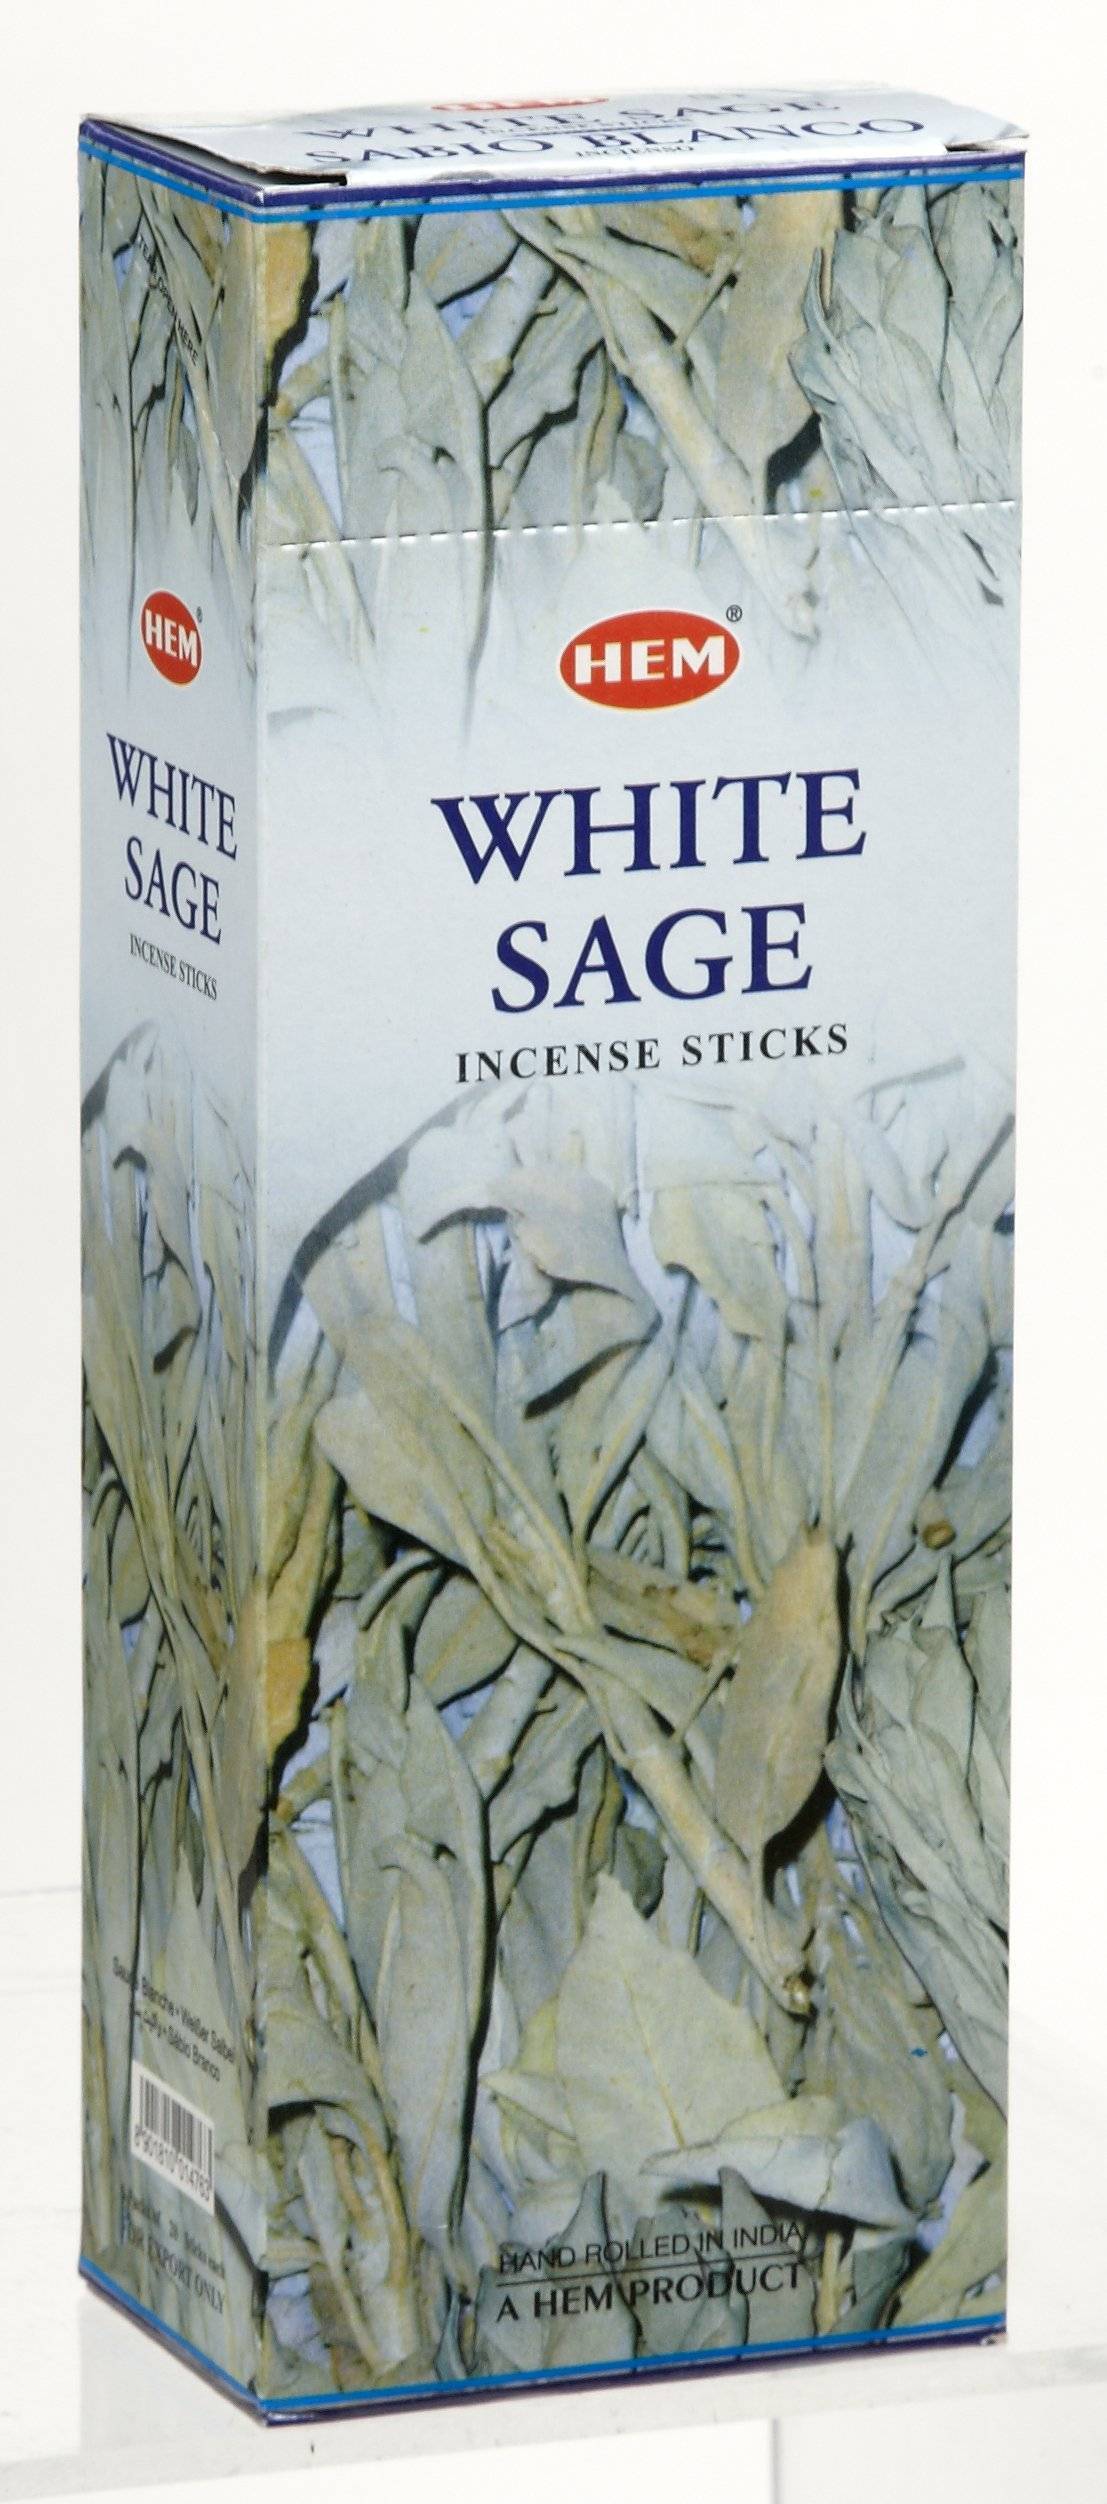 Hem Imported Incense Sticks White Sage